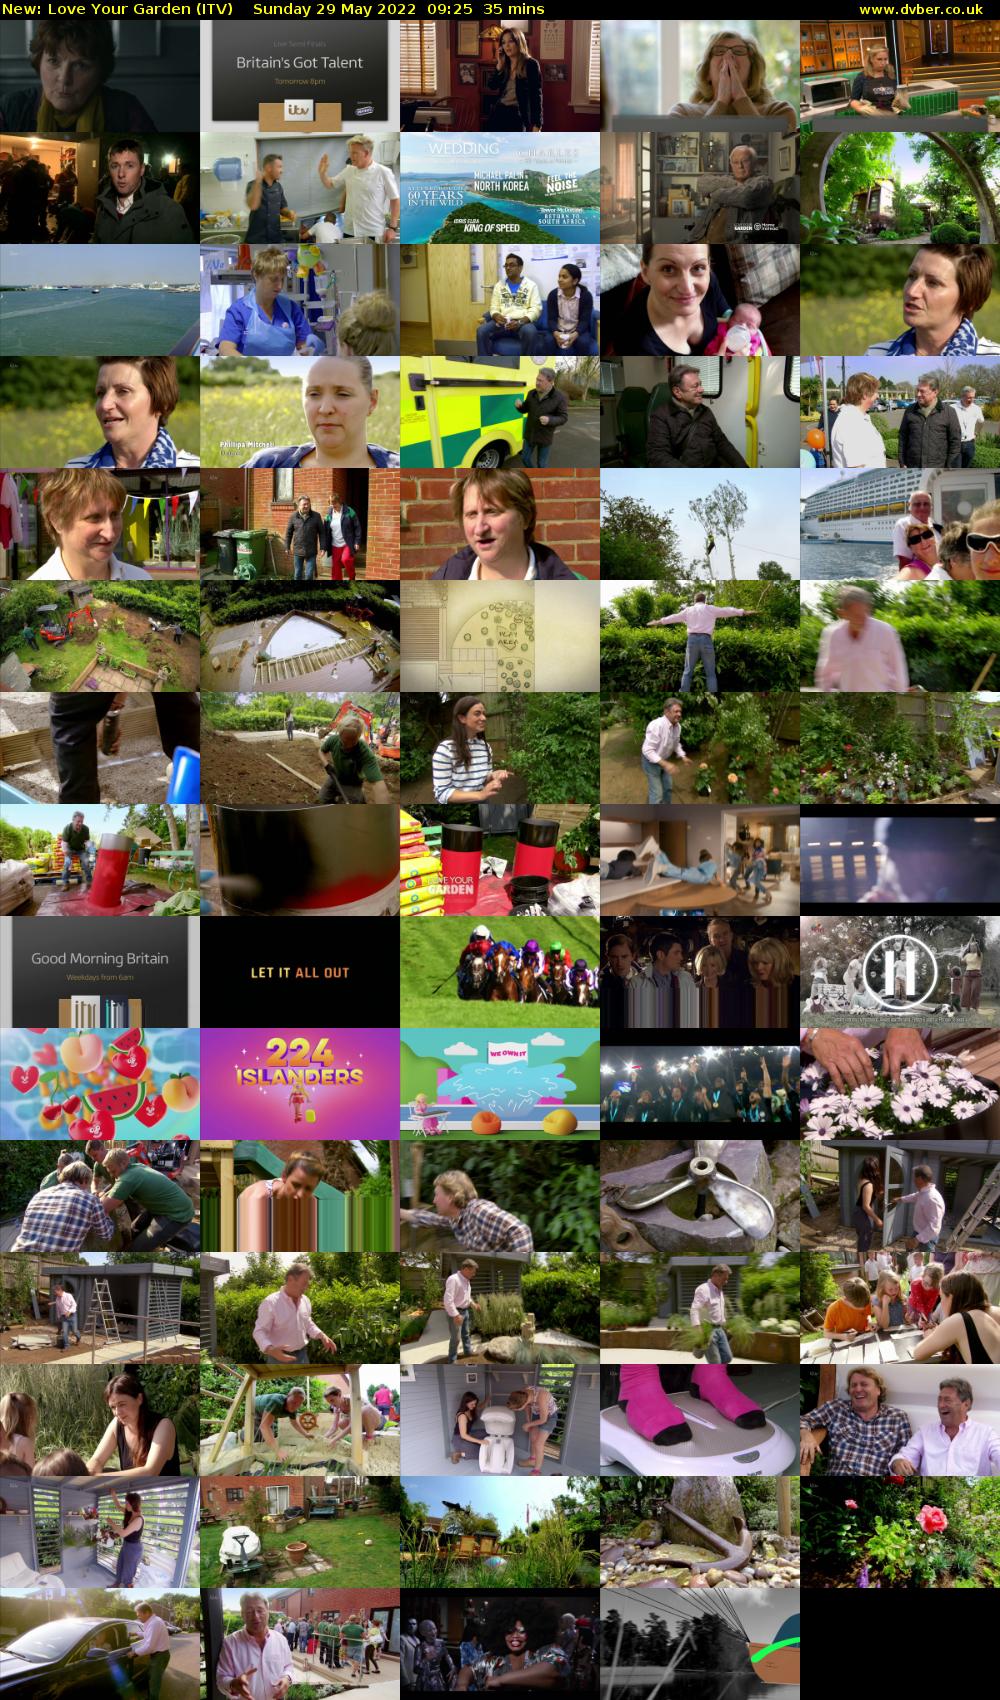 Love Your Garden (ITV) Sunday 29 May 2022 09:25 - 10:00